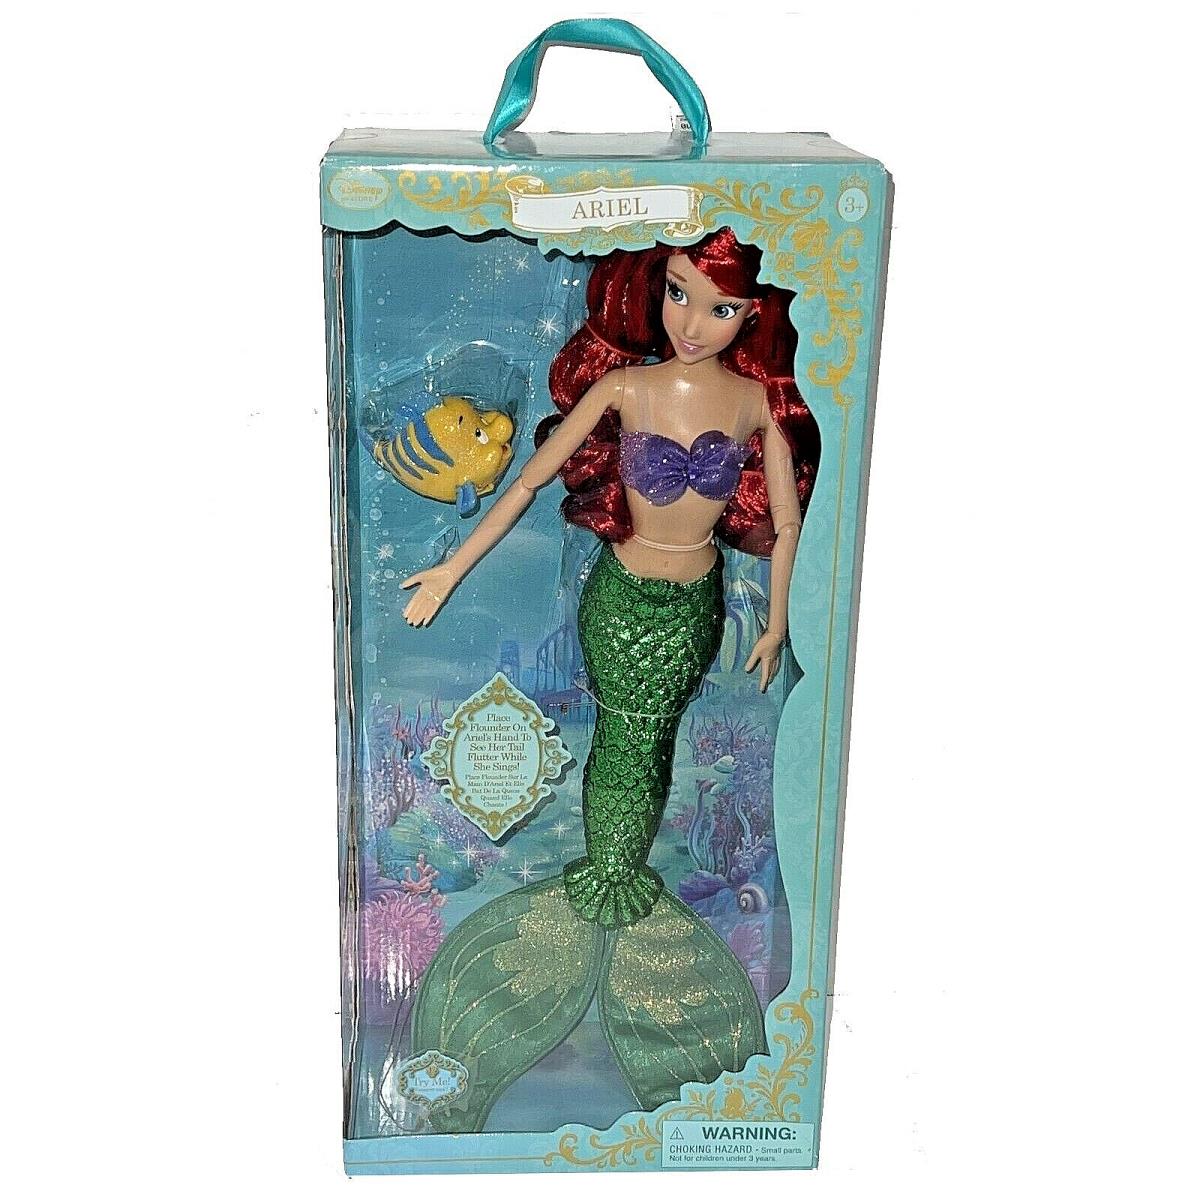 Disney Store Ariel The Little Mermaid 17 Singing Princess Doll Flounder - Doll Hair: Red, Doll Eye: Blue